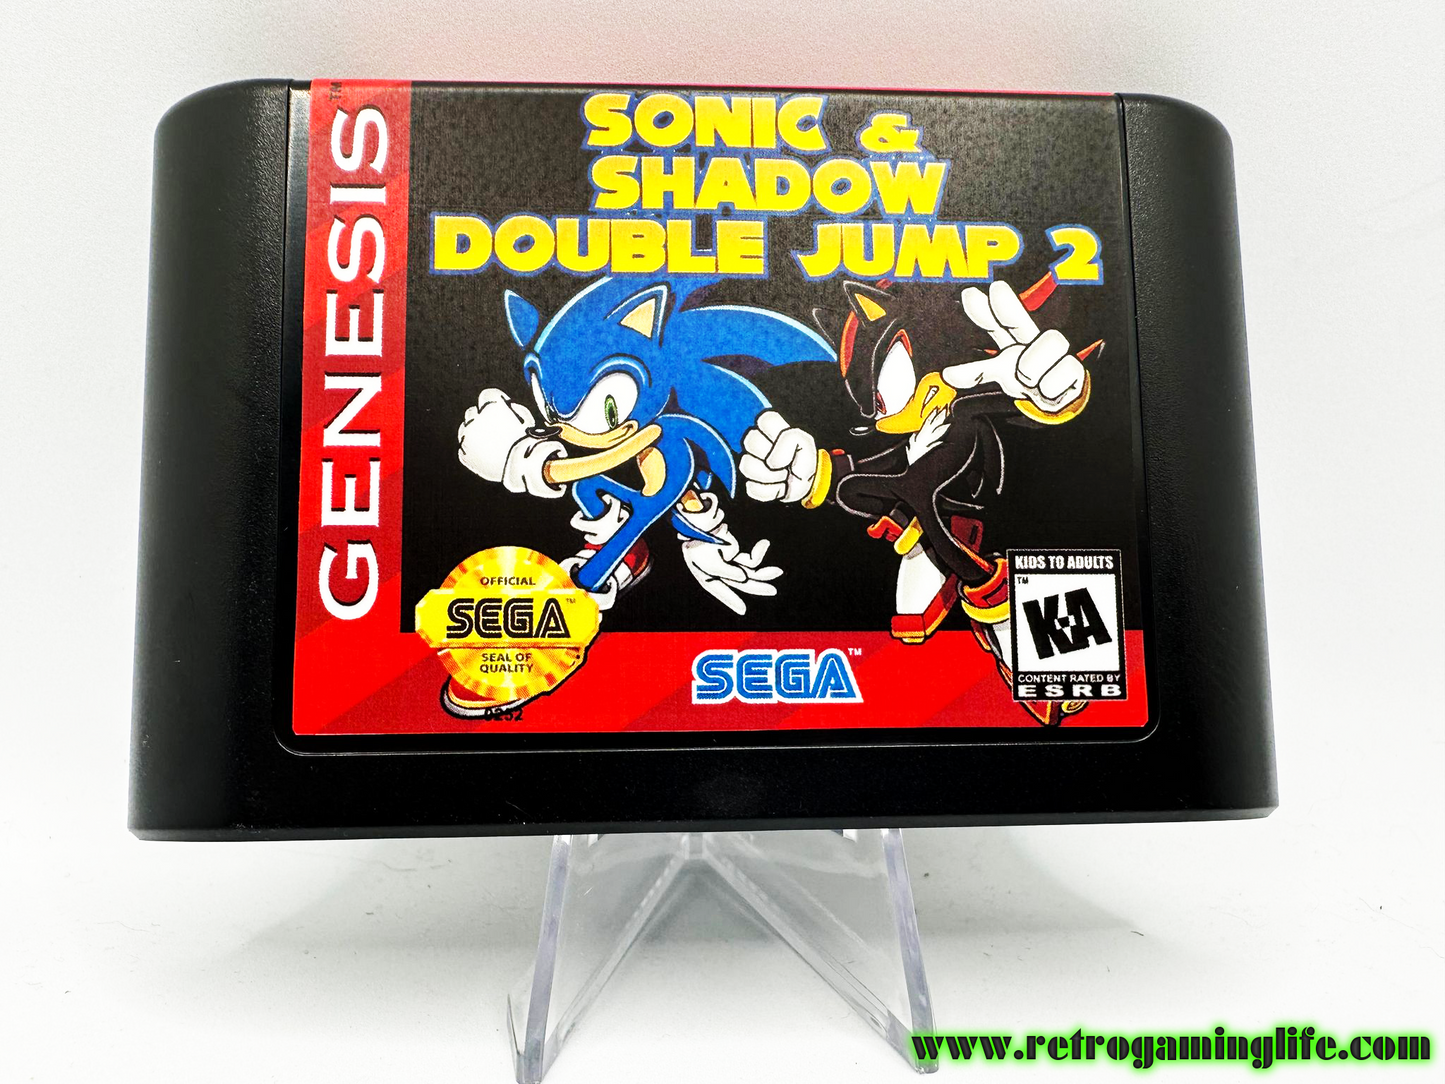 Sonic & Shadow Double Jump 2 Sega Genesis Repro Game Cart